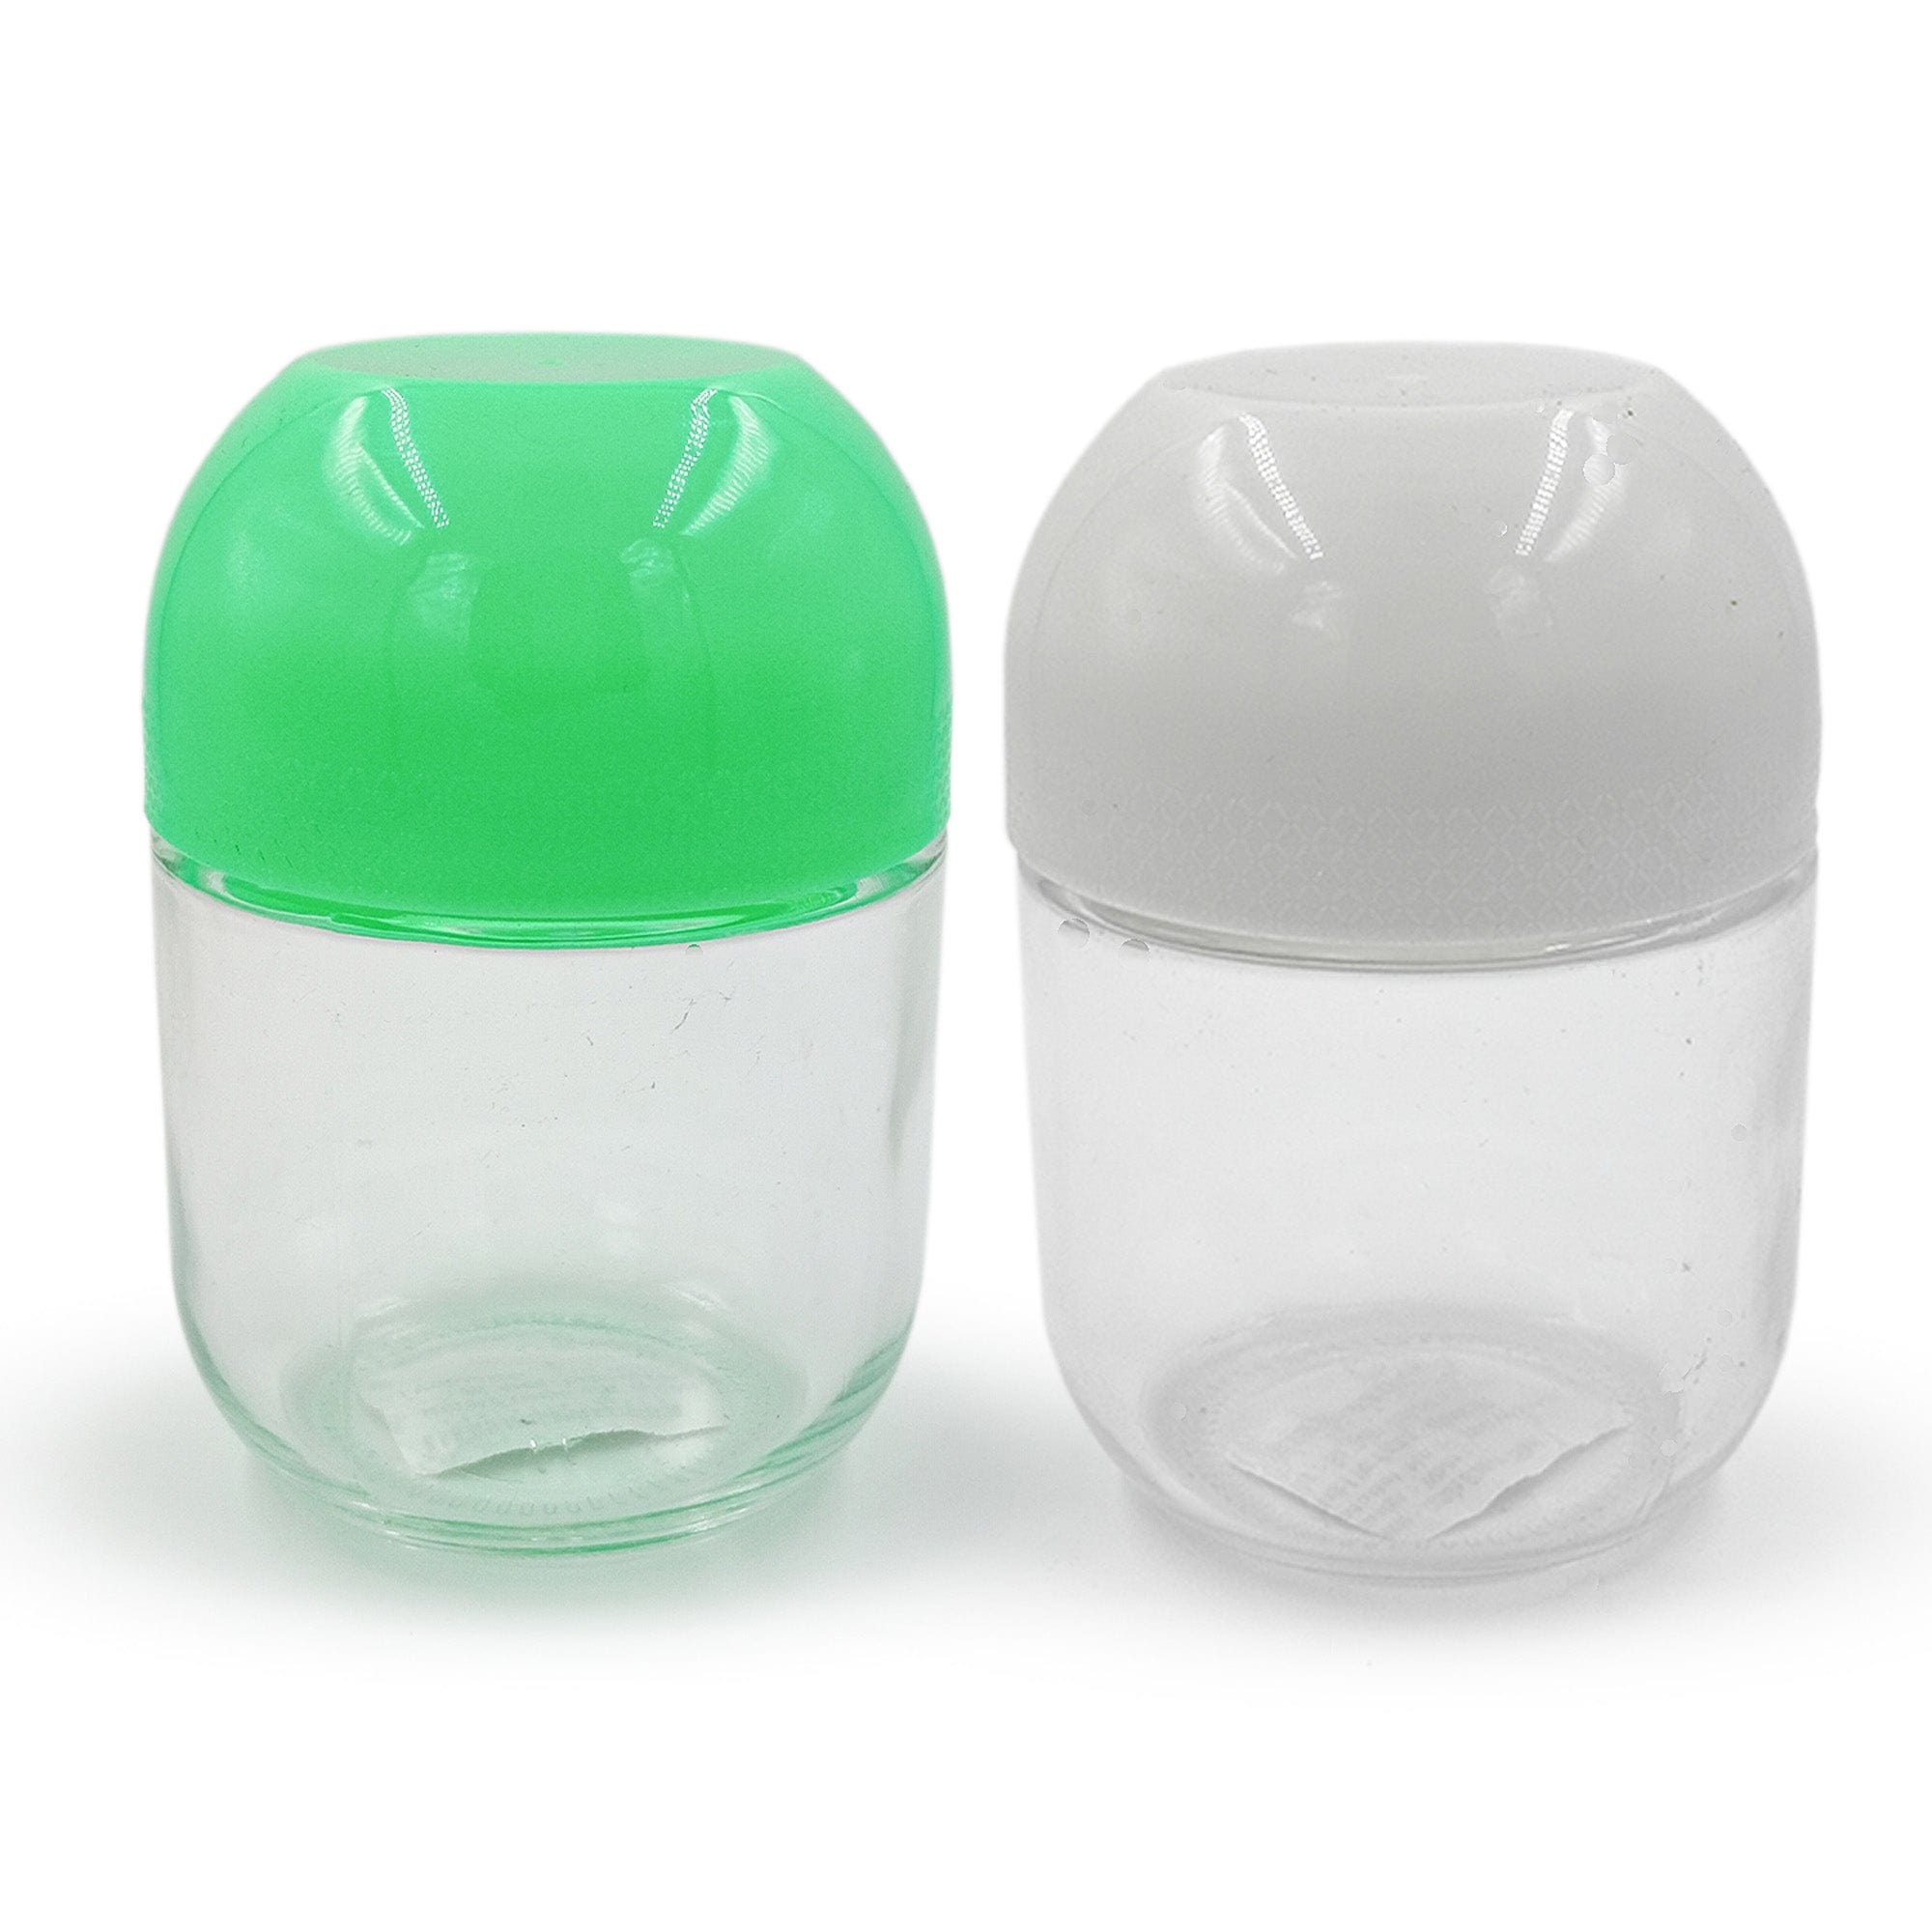 Red Butler Jars Glass Jars | 2pcs Set |350ml | Green & White DSGW35A4 Redbutler